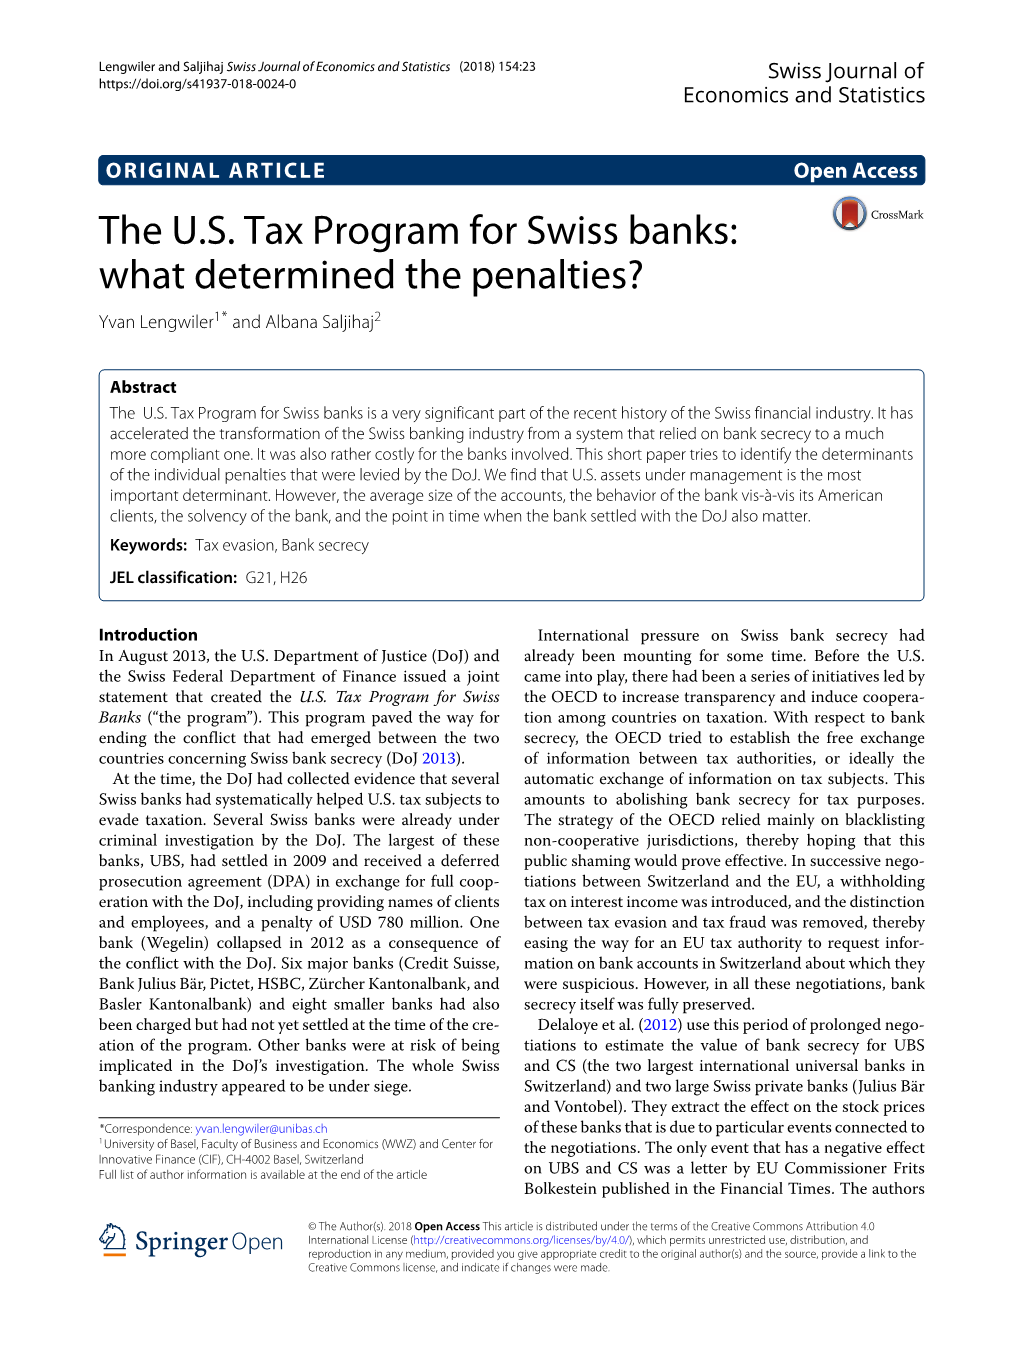 The U.S. Tax Program for Swiss Banks: What Determined the Penalties? Yvan Lengwiler1* and Albana Saljihaj2